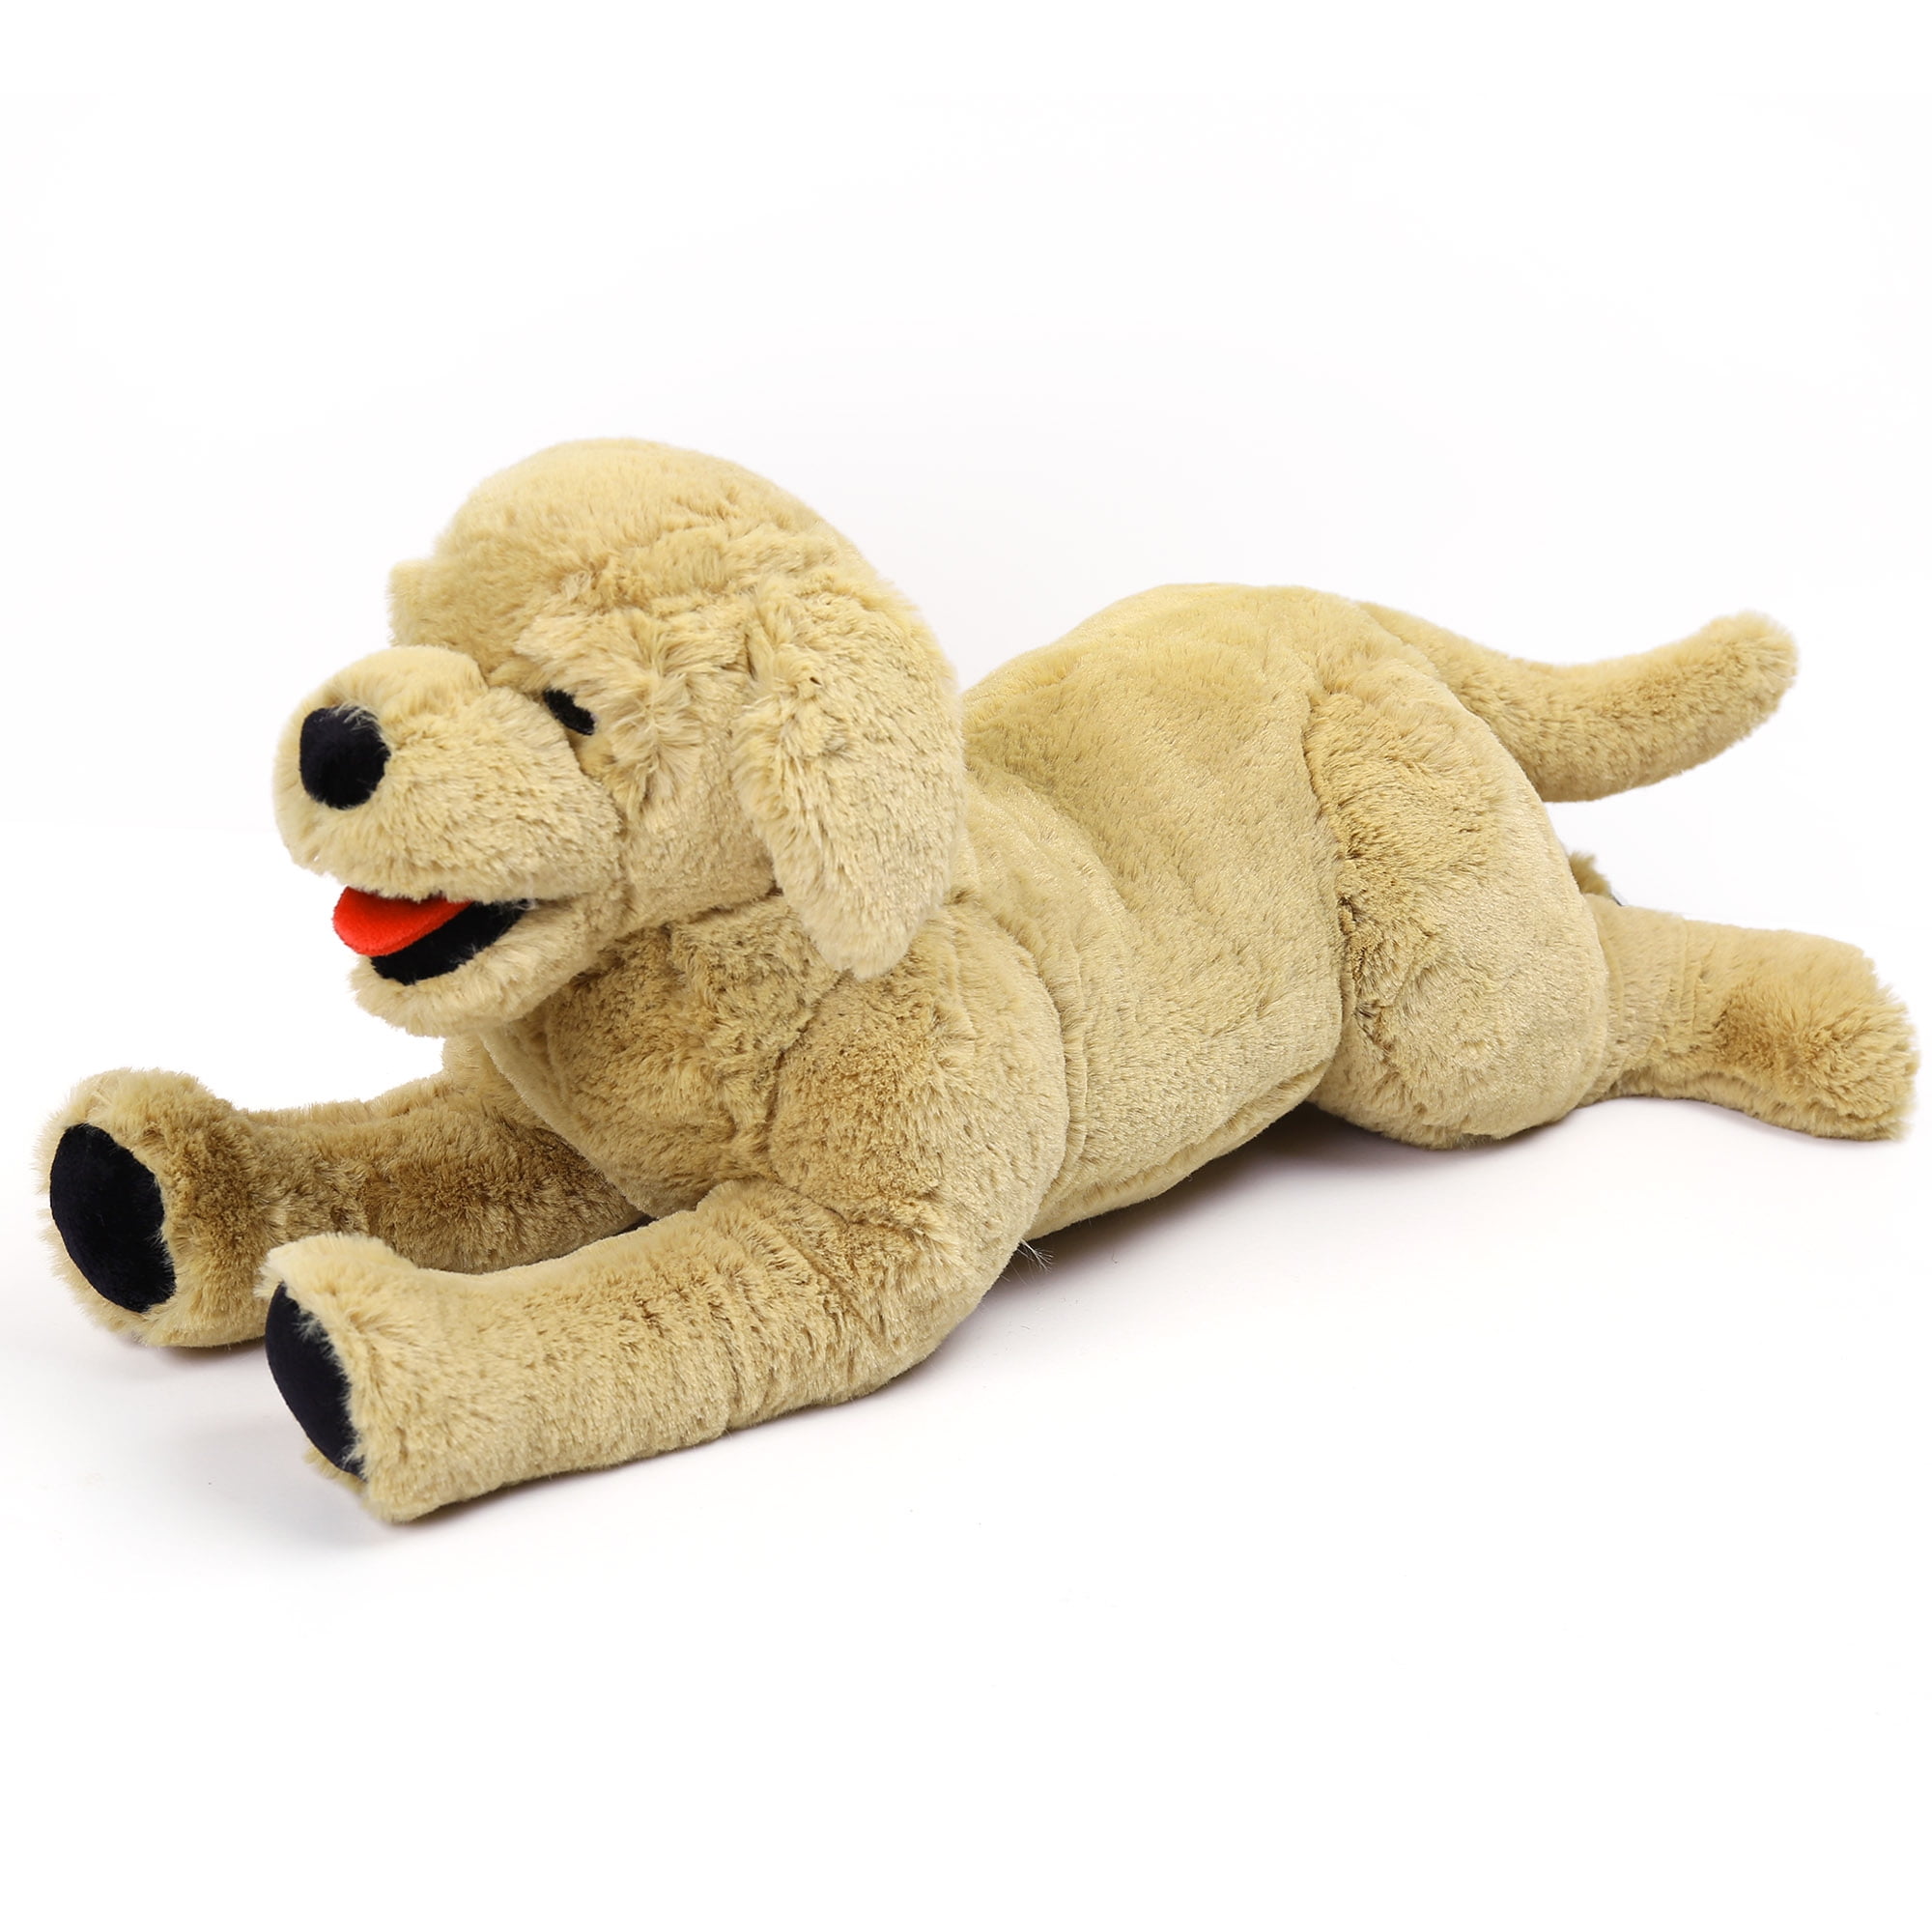 Labrador Retriever Stuffed Animal Plush Large Dog Black Kids Toys Very Soft New 